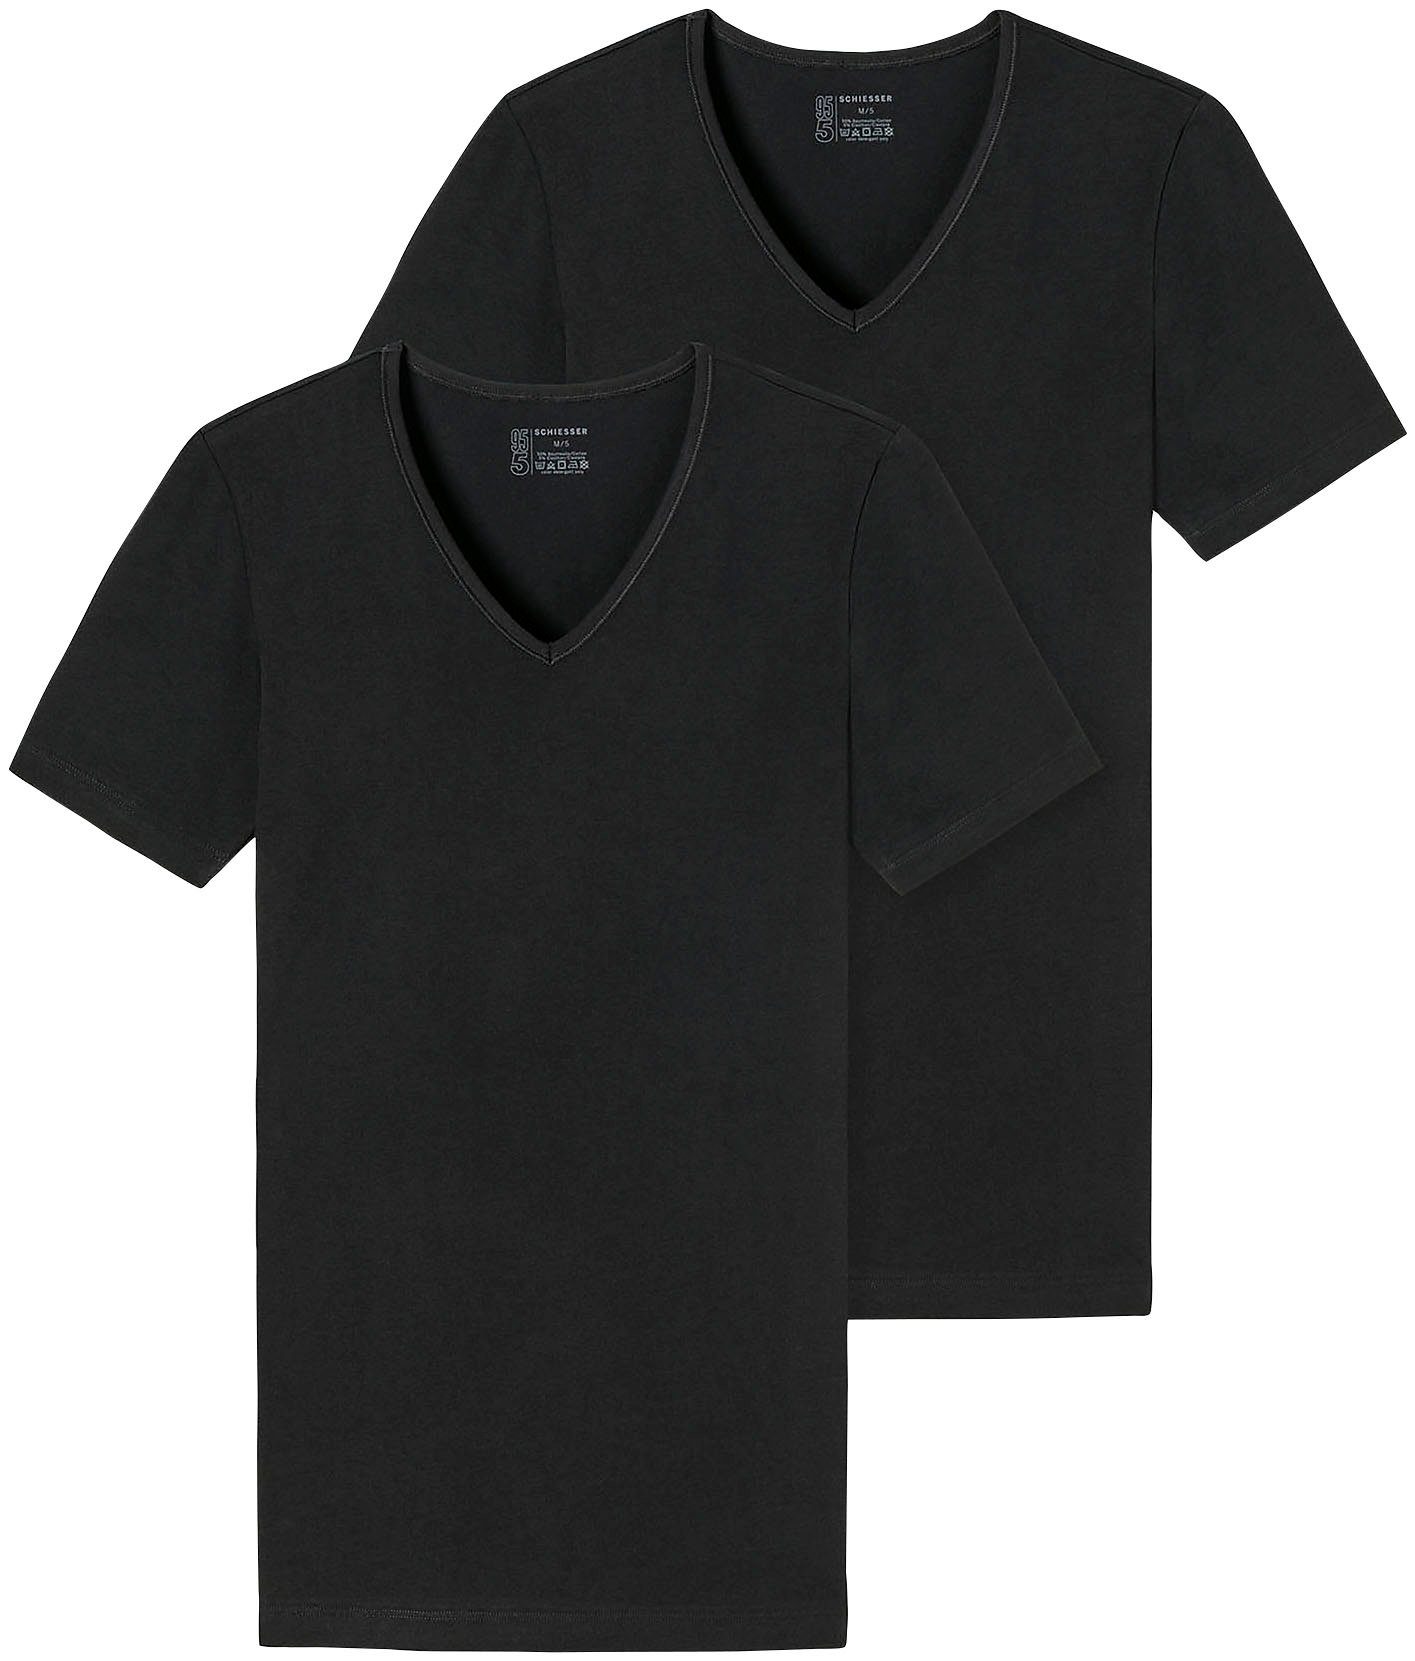 Schiesser (2er-Pack) V-Ausschnitt mit V-Shirt schwarz